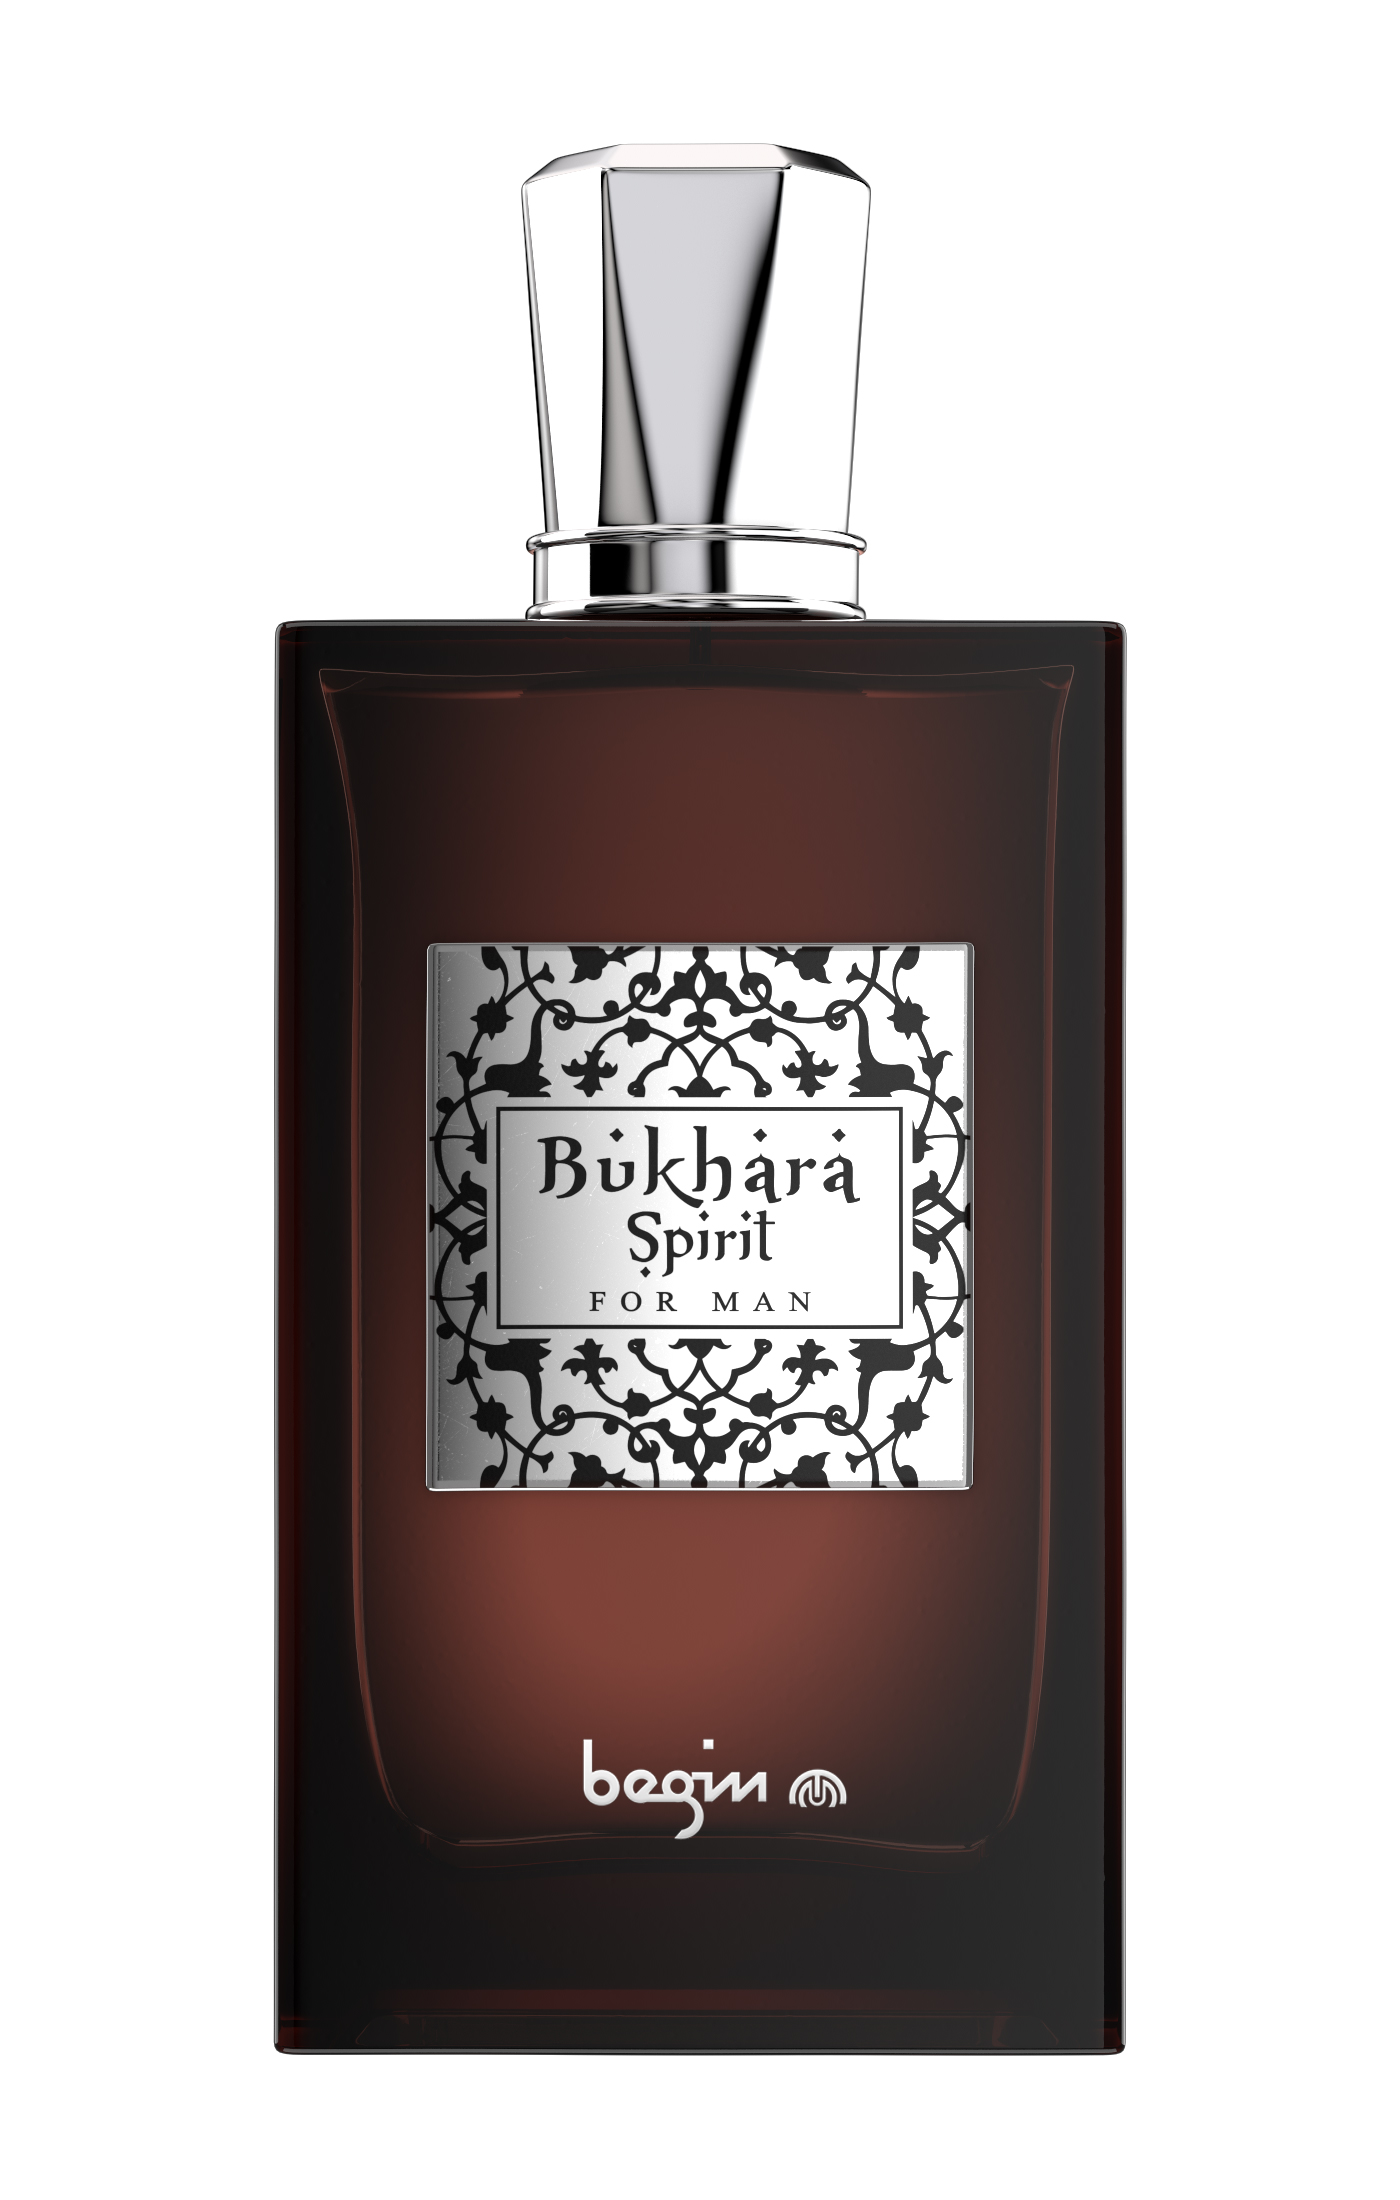 Bukhara Spirit For Man Begim cologne - a fragrance for men 2016